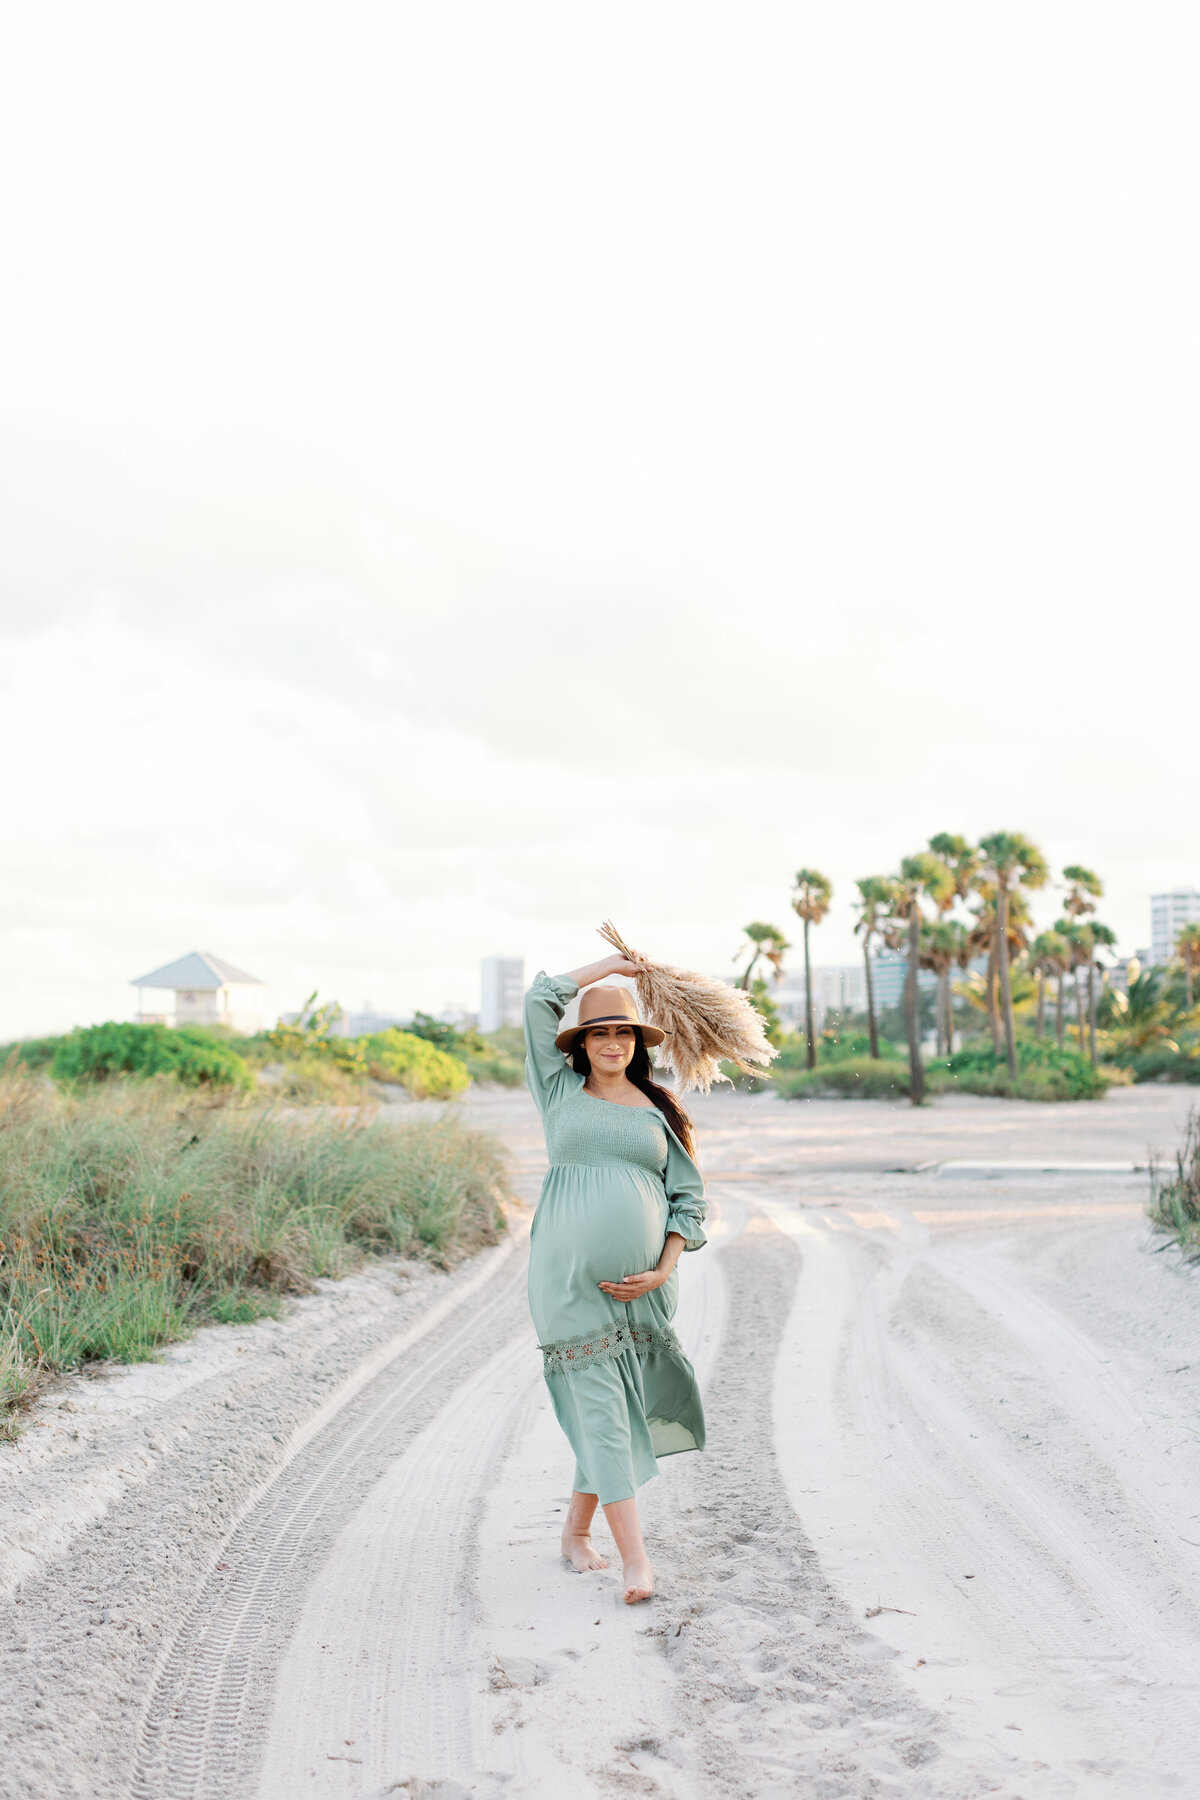 Maria Cordova Photography, Maternity Photographer, Maternity Session, Miami, South Florida Lifestyle Maternity